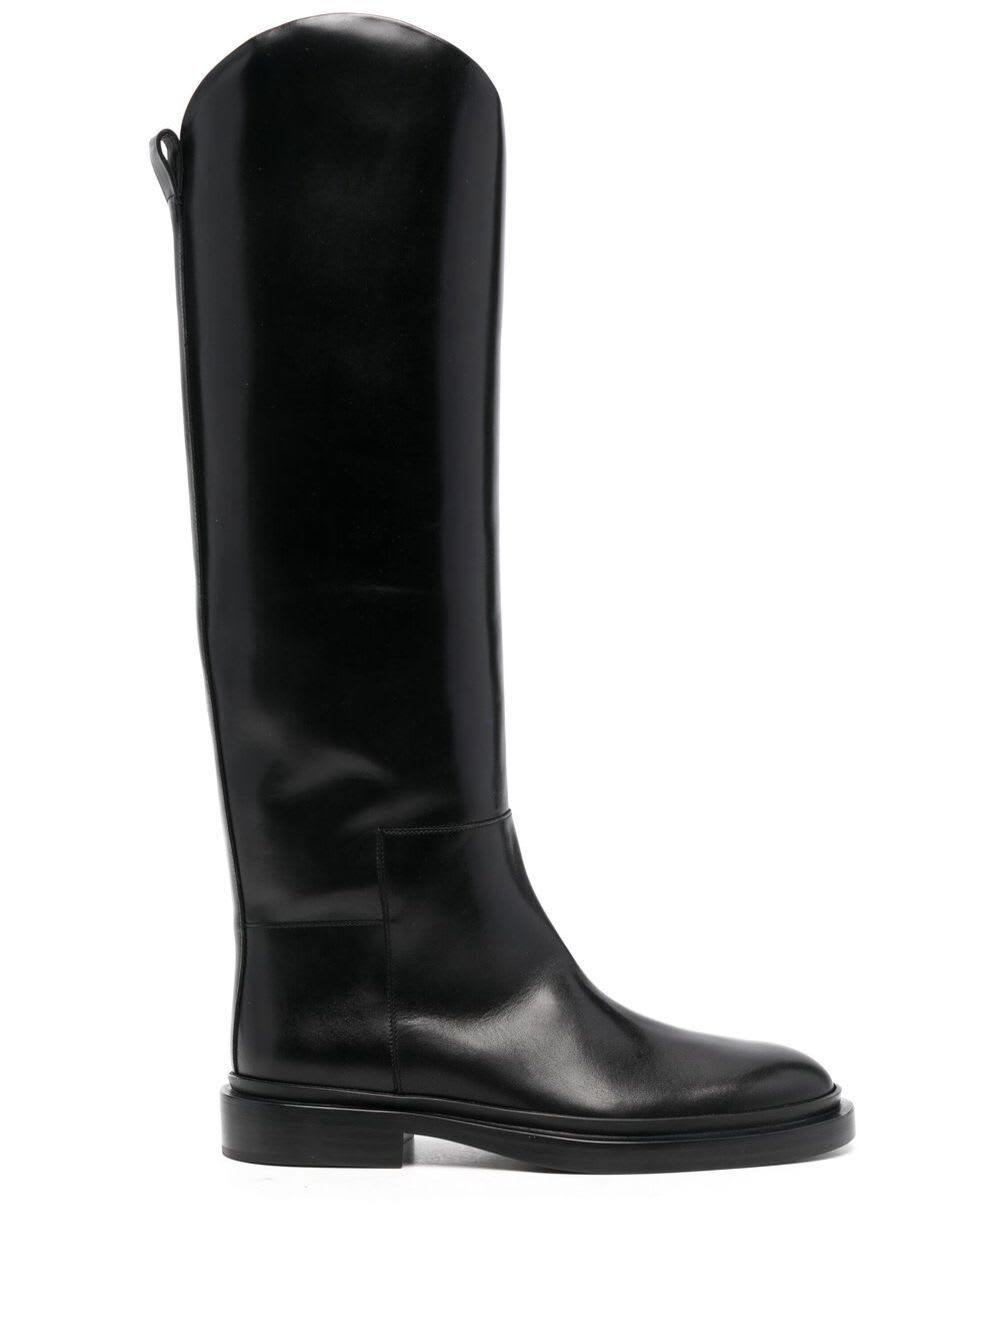 Jil Sander Royal Black Leather High Boots Jil Sander Woman